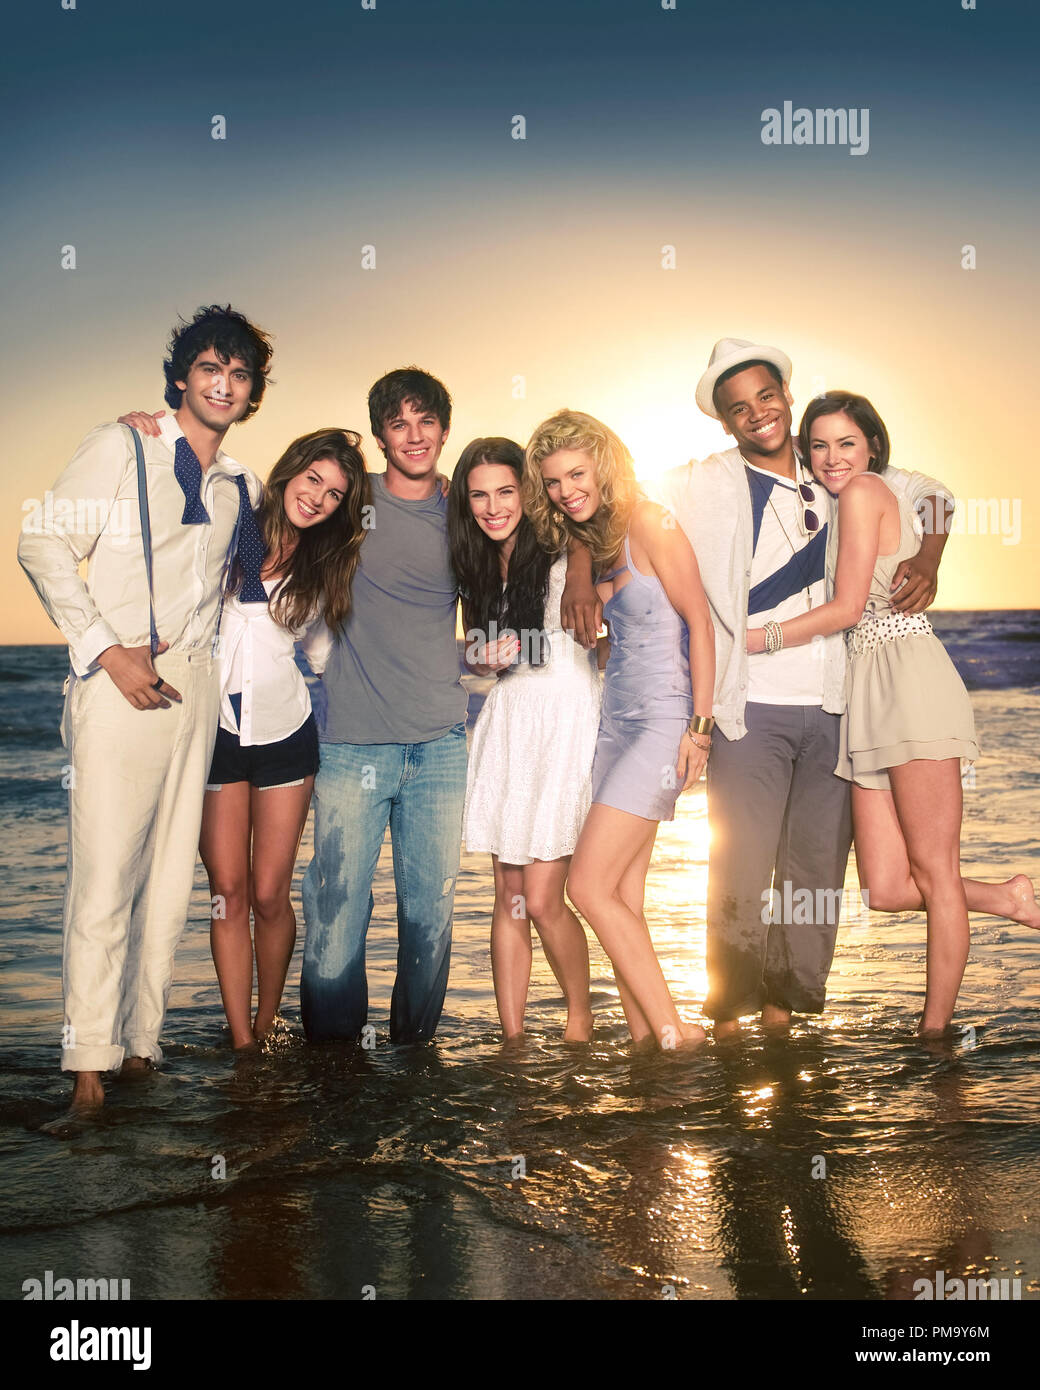 Temporada 2 90210 (2009- 2010) elenco Shenae Grimes, AnnaLynne McCord, Jessica Stroup y Jessica Lowndes Foto de stock